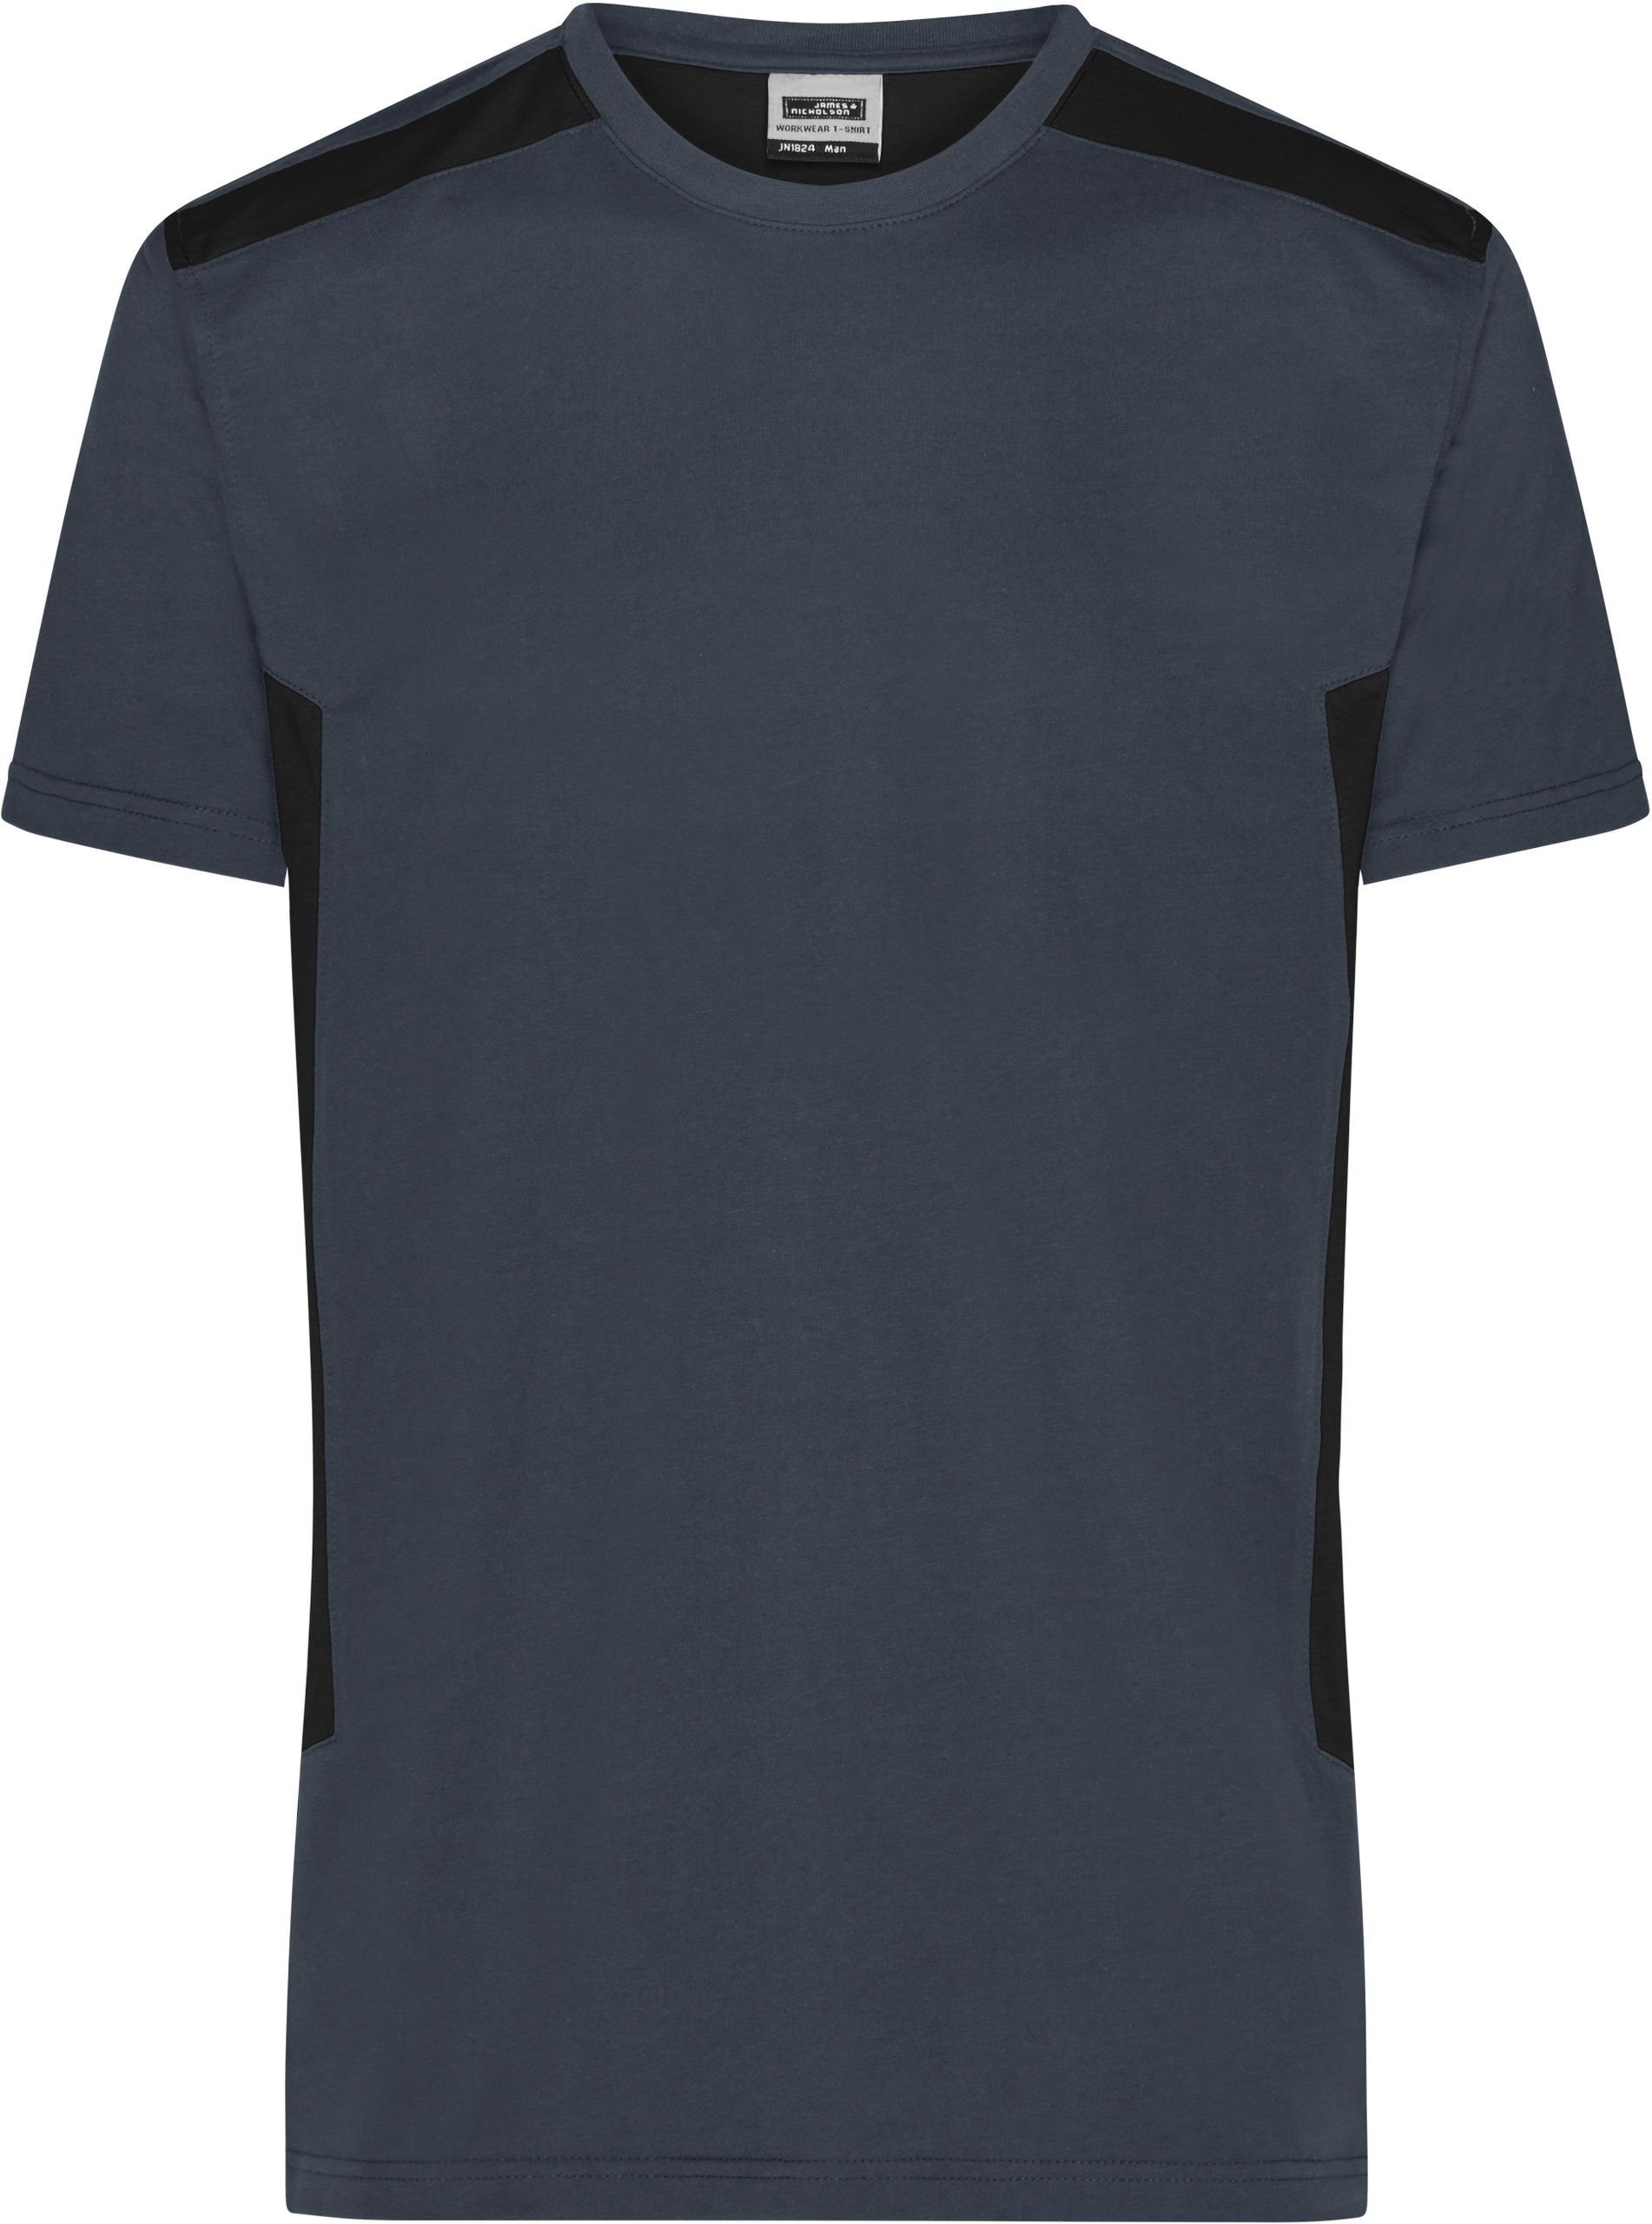 James & Nicholson T-Shirt Herren Workwear T-Shirt - Strong carbon/black